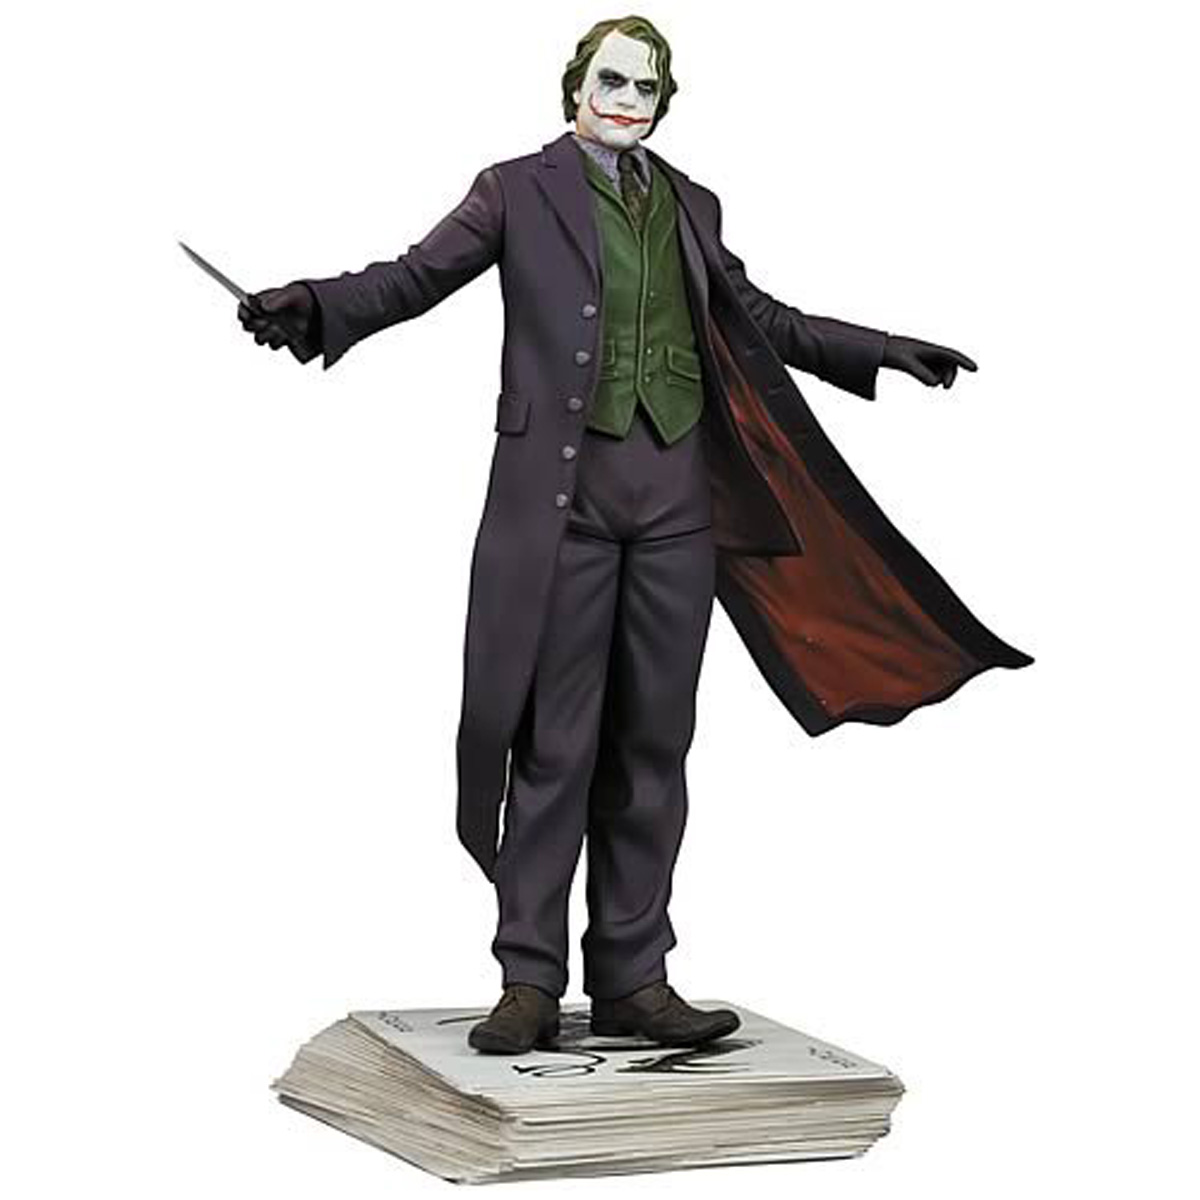 #17. The Joker from The Dark Knight